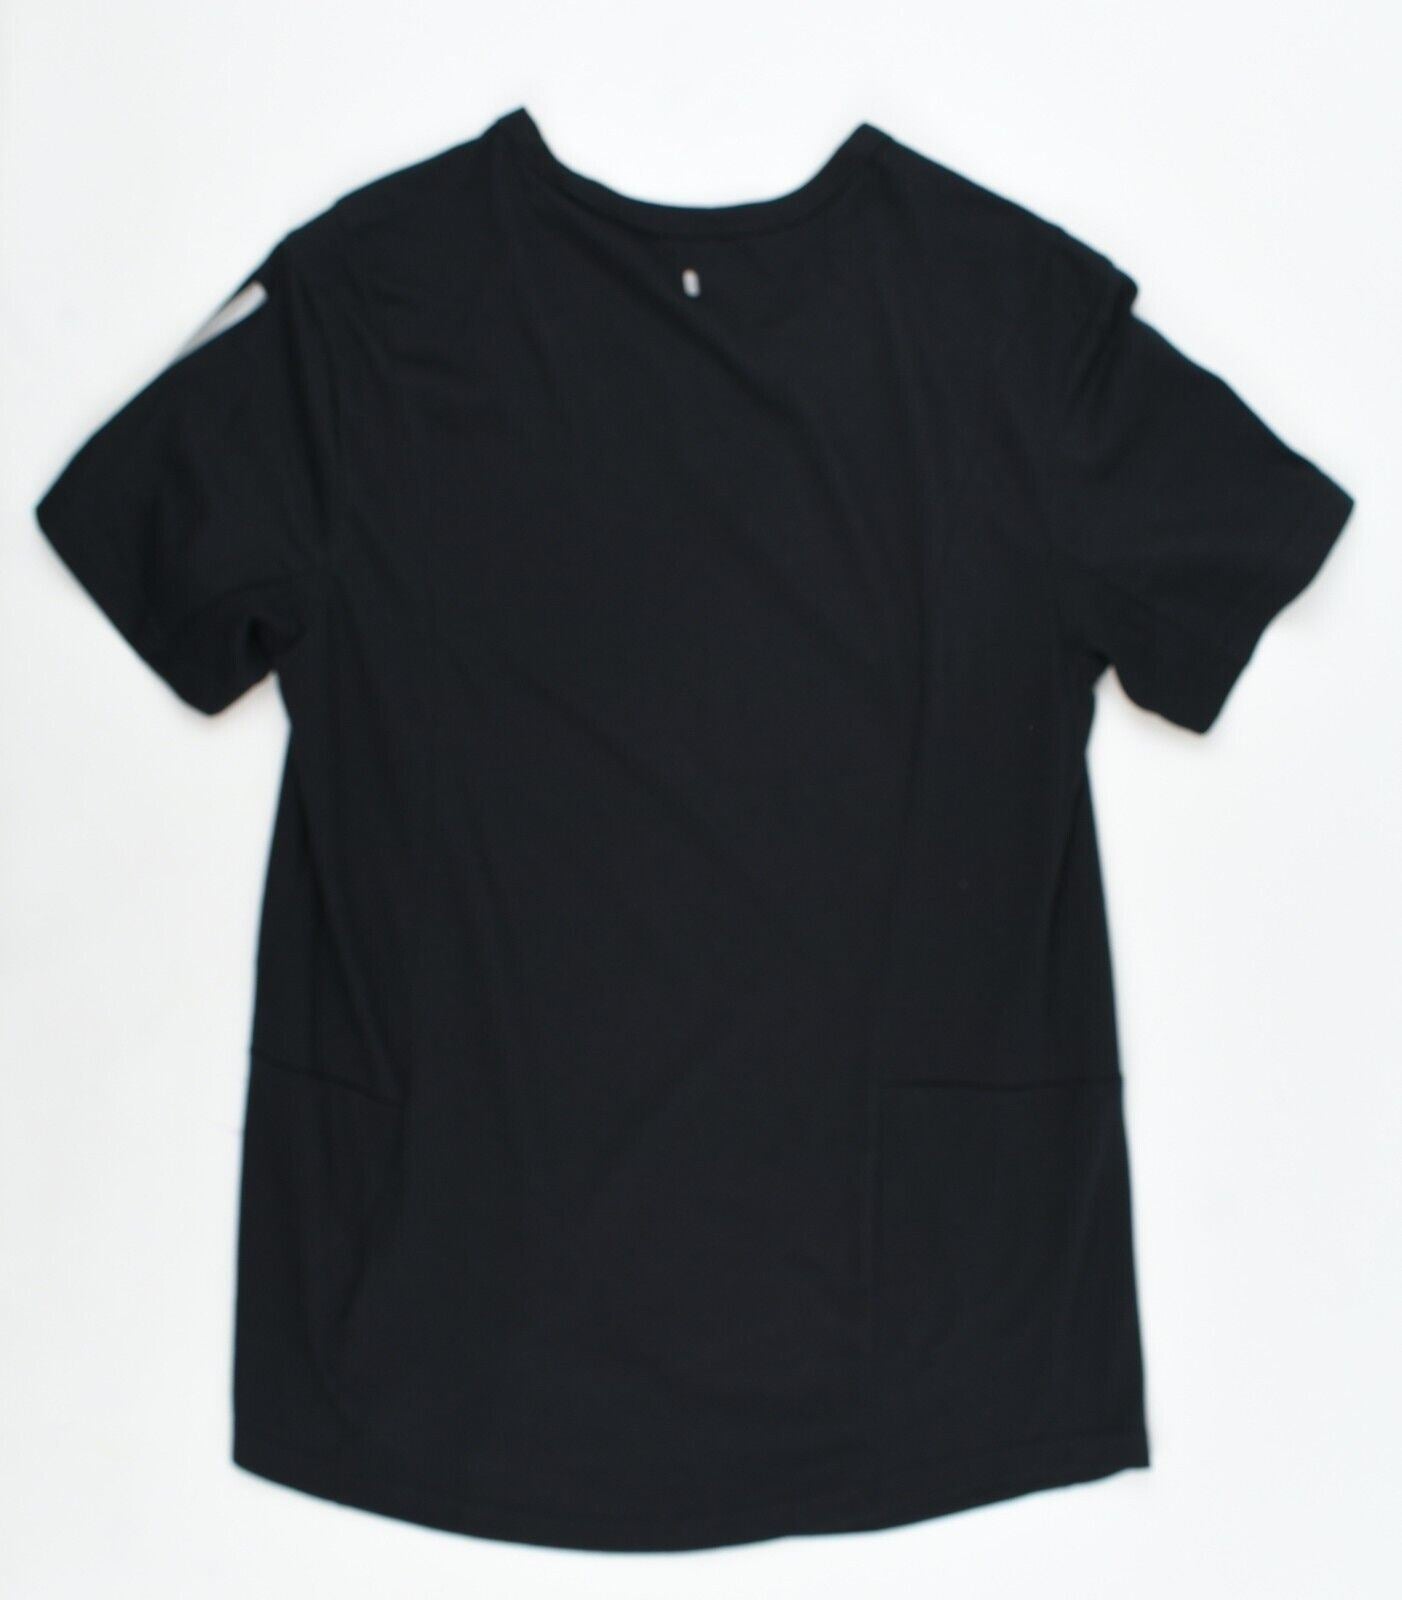 ADIDAS Women's SPACE TEE Running /Workout T-shirt, Black, size S (UK 10)